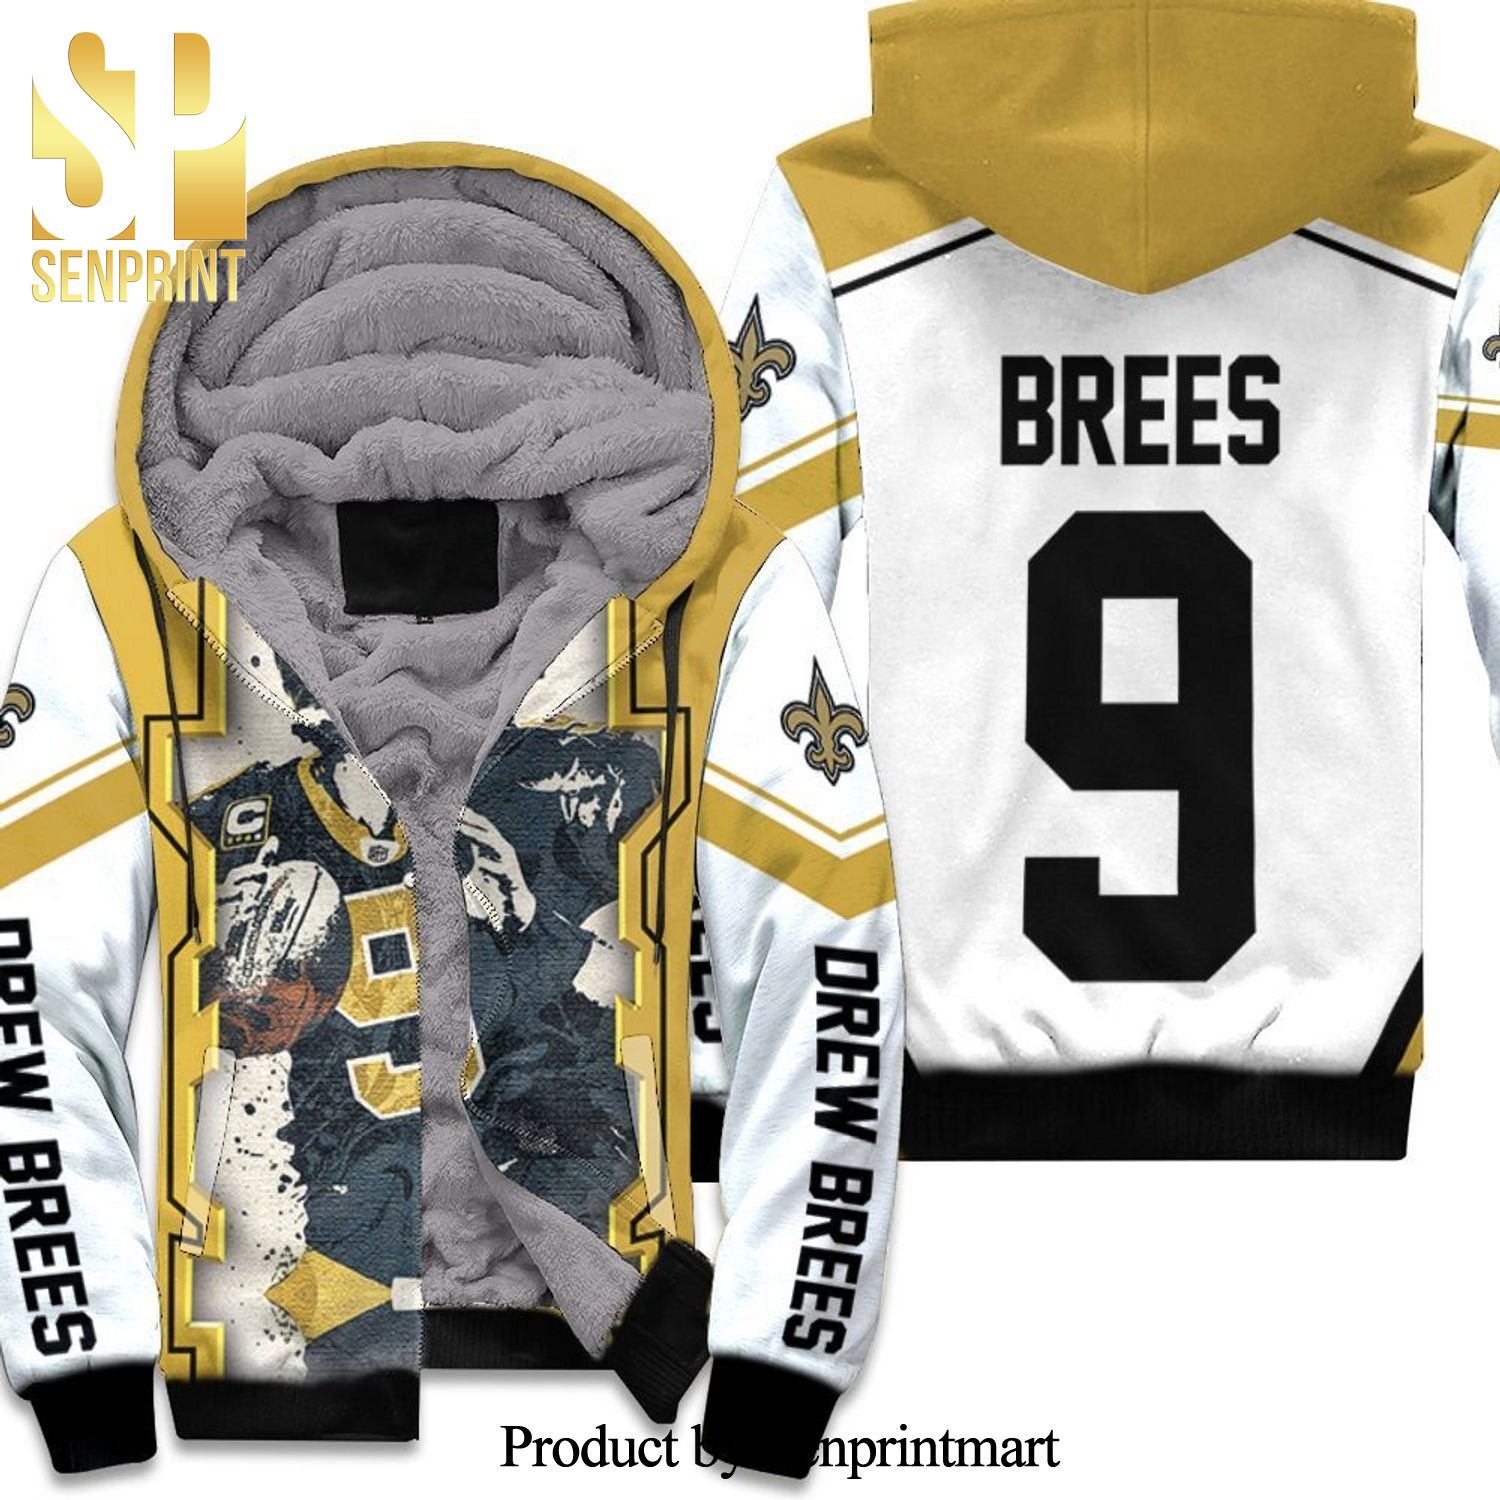 Drew Brees New Orleans Saints Paint Style Cool Style Unisex Fleece Hoodie